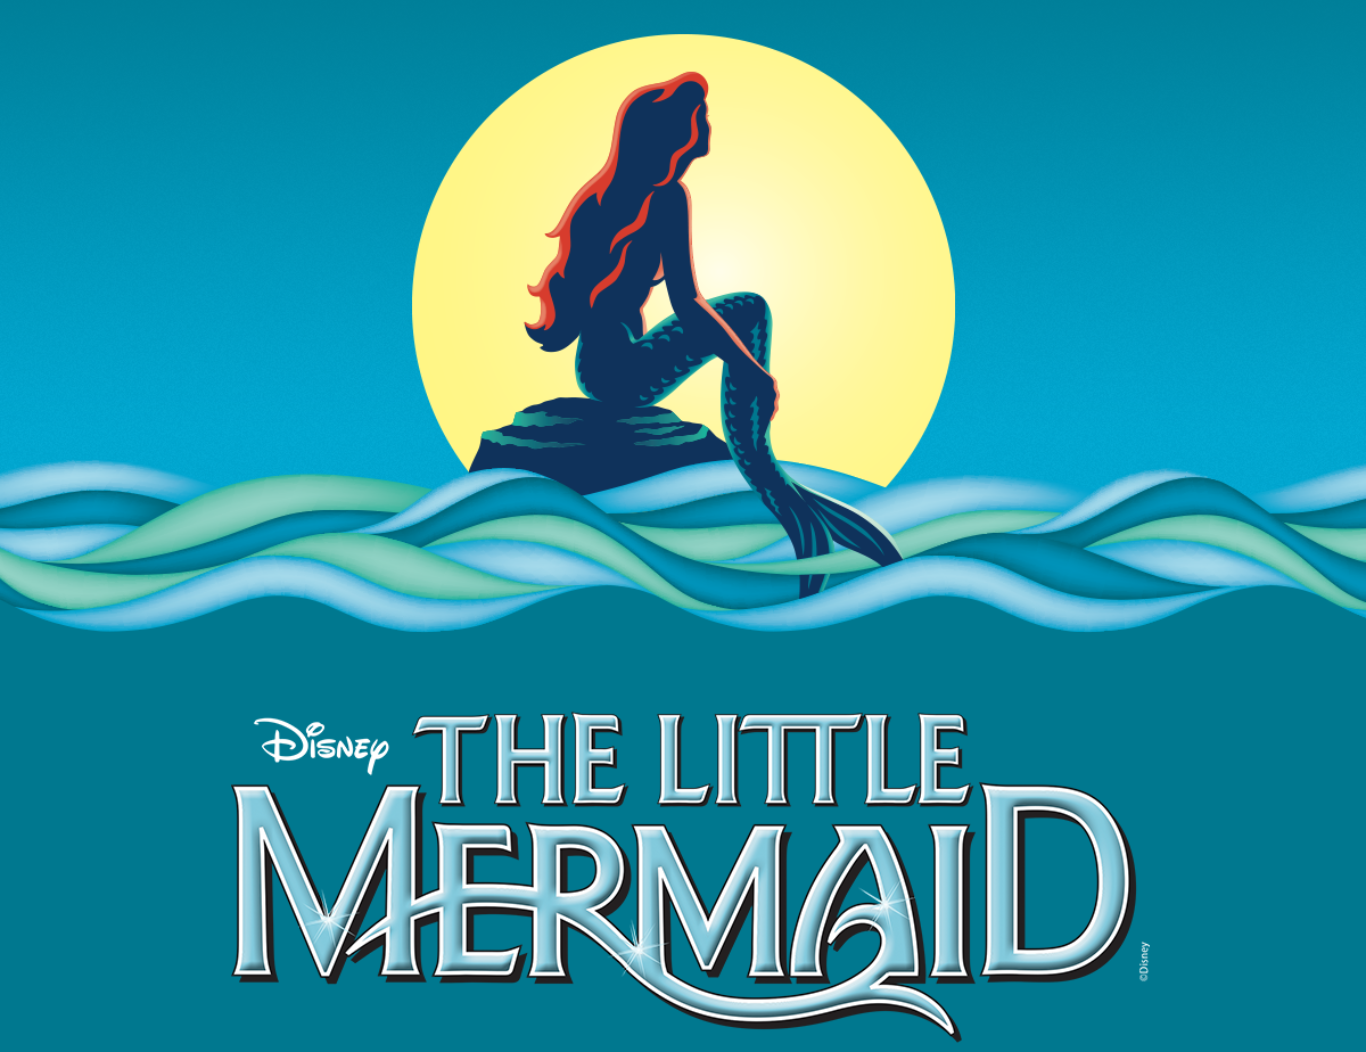 The Little Mermaid La Petite Sirène Baguette on Broadway